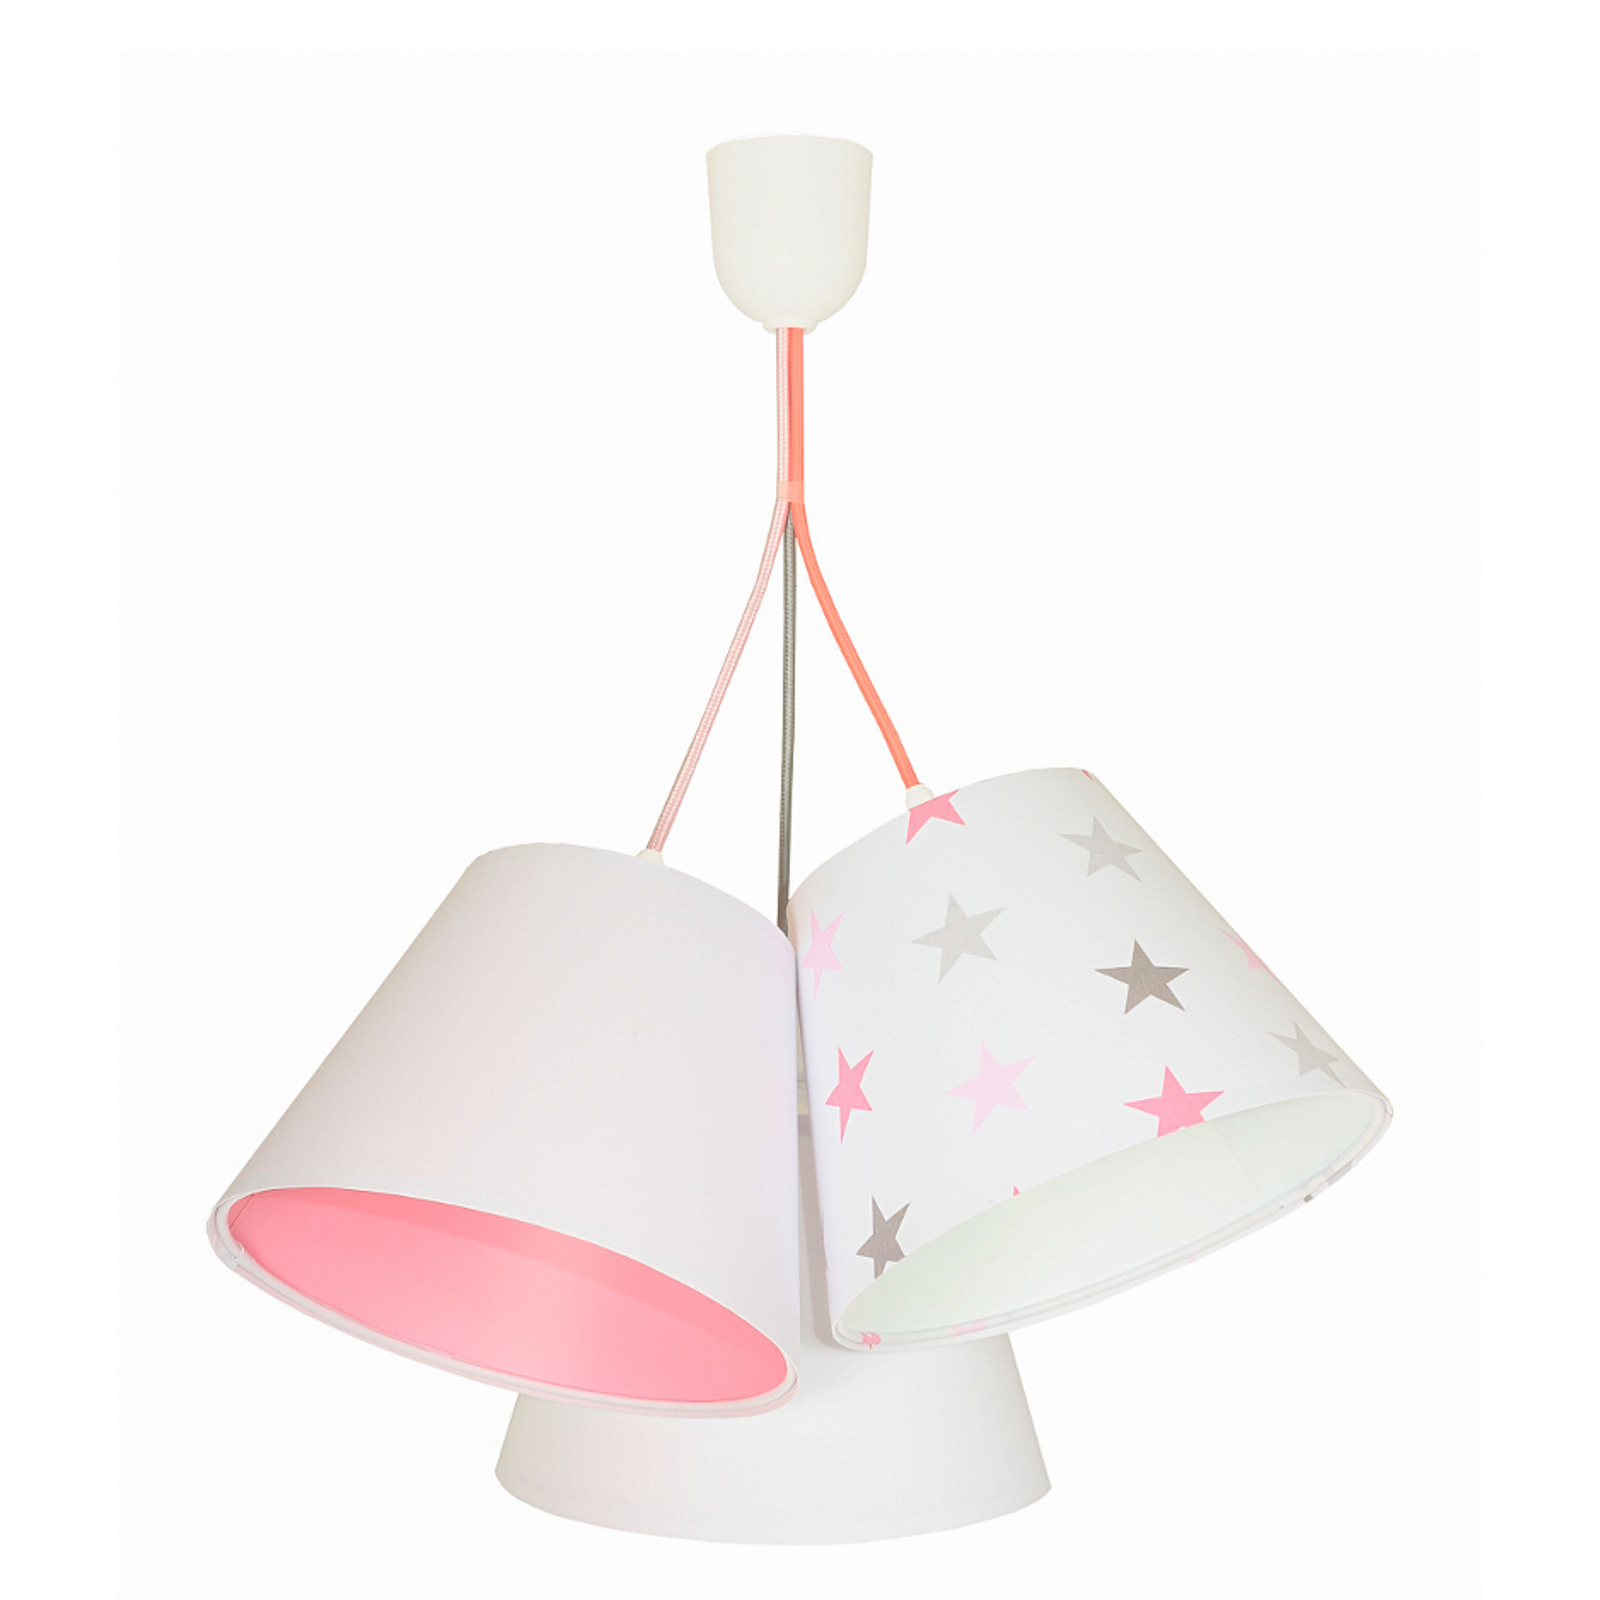 Kinderkamer-hanglamp Zsofia 3-lamps wit/roze